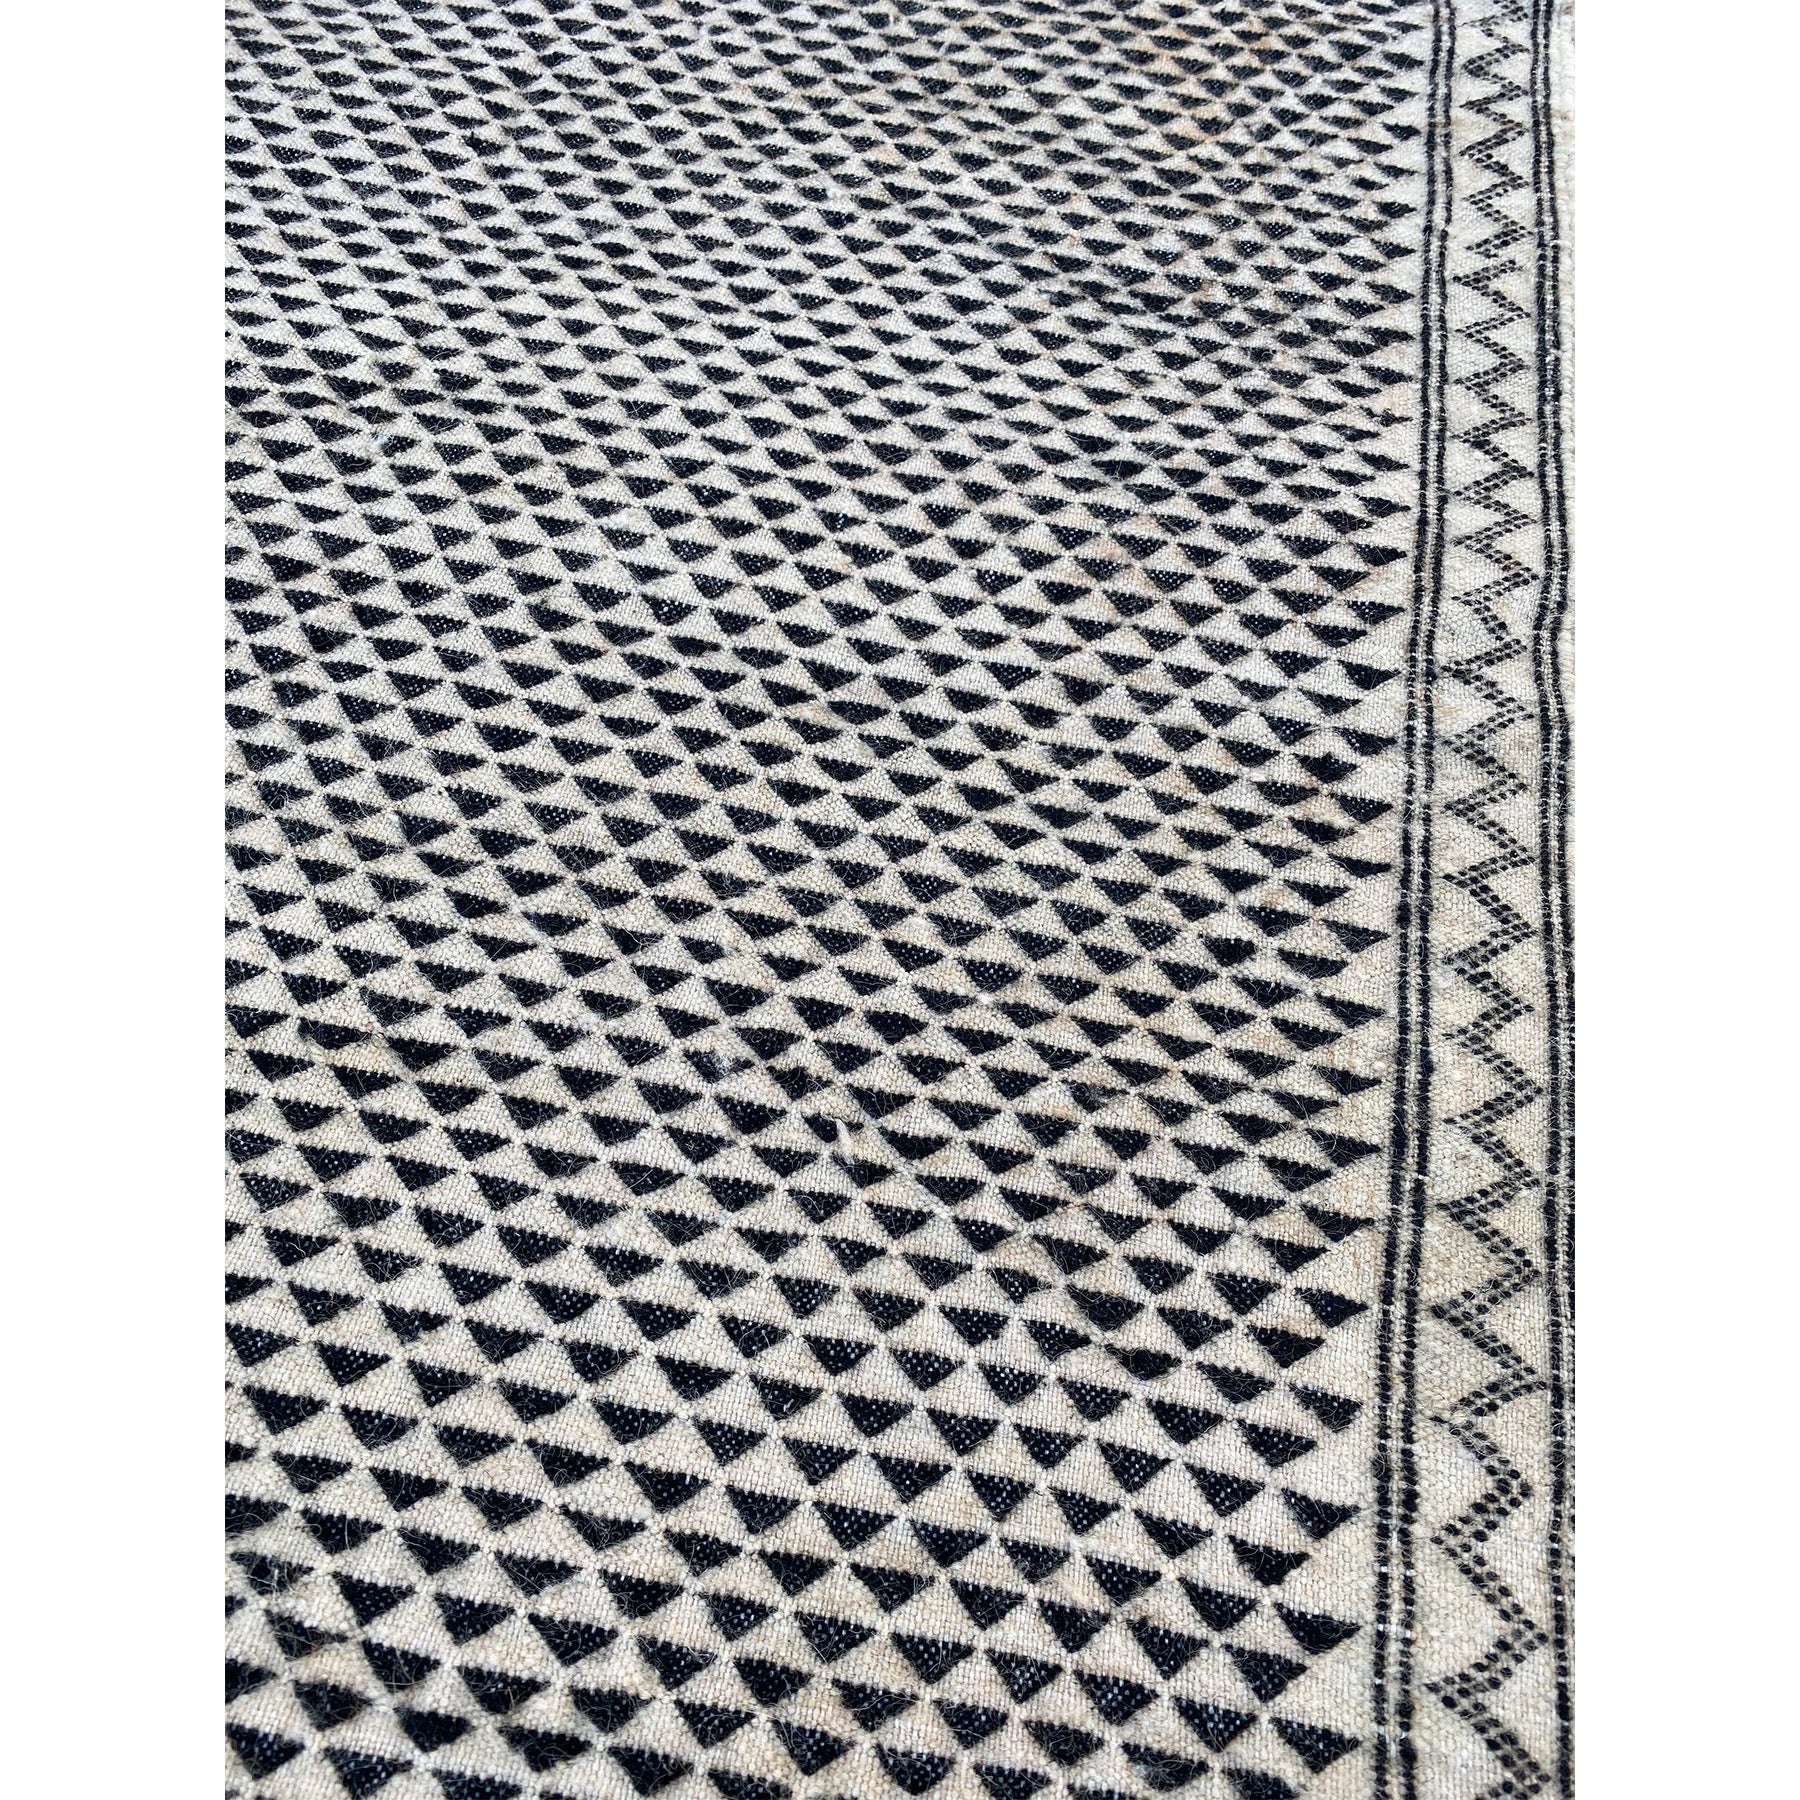 White and black flat woven Moroccan kilim rug - Kantara | Moroccan Rugs